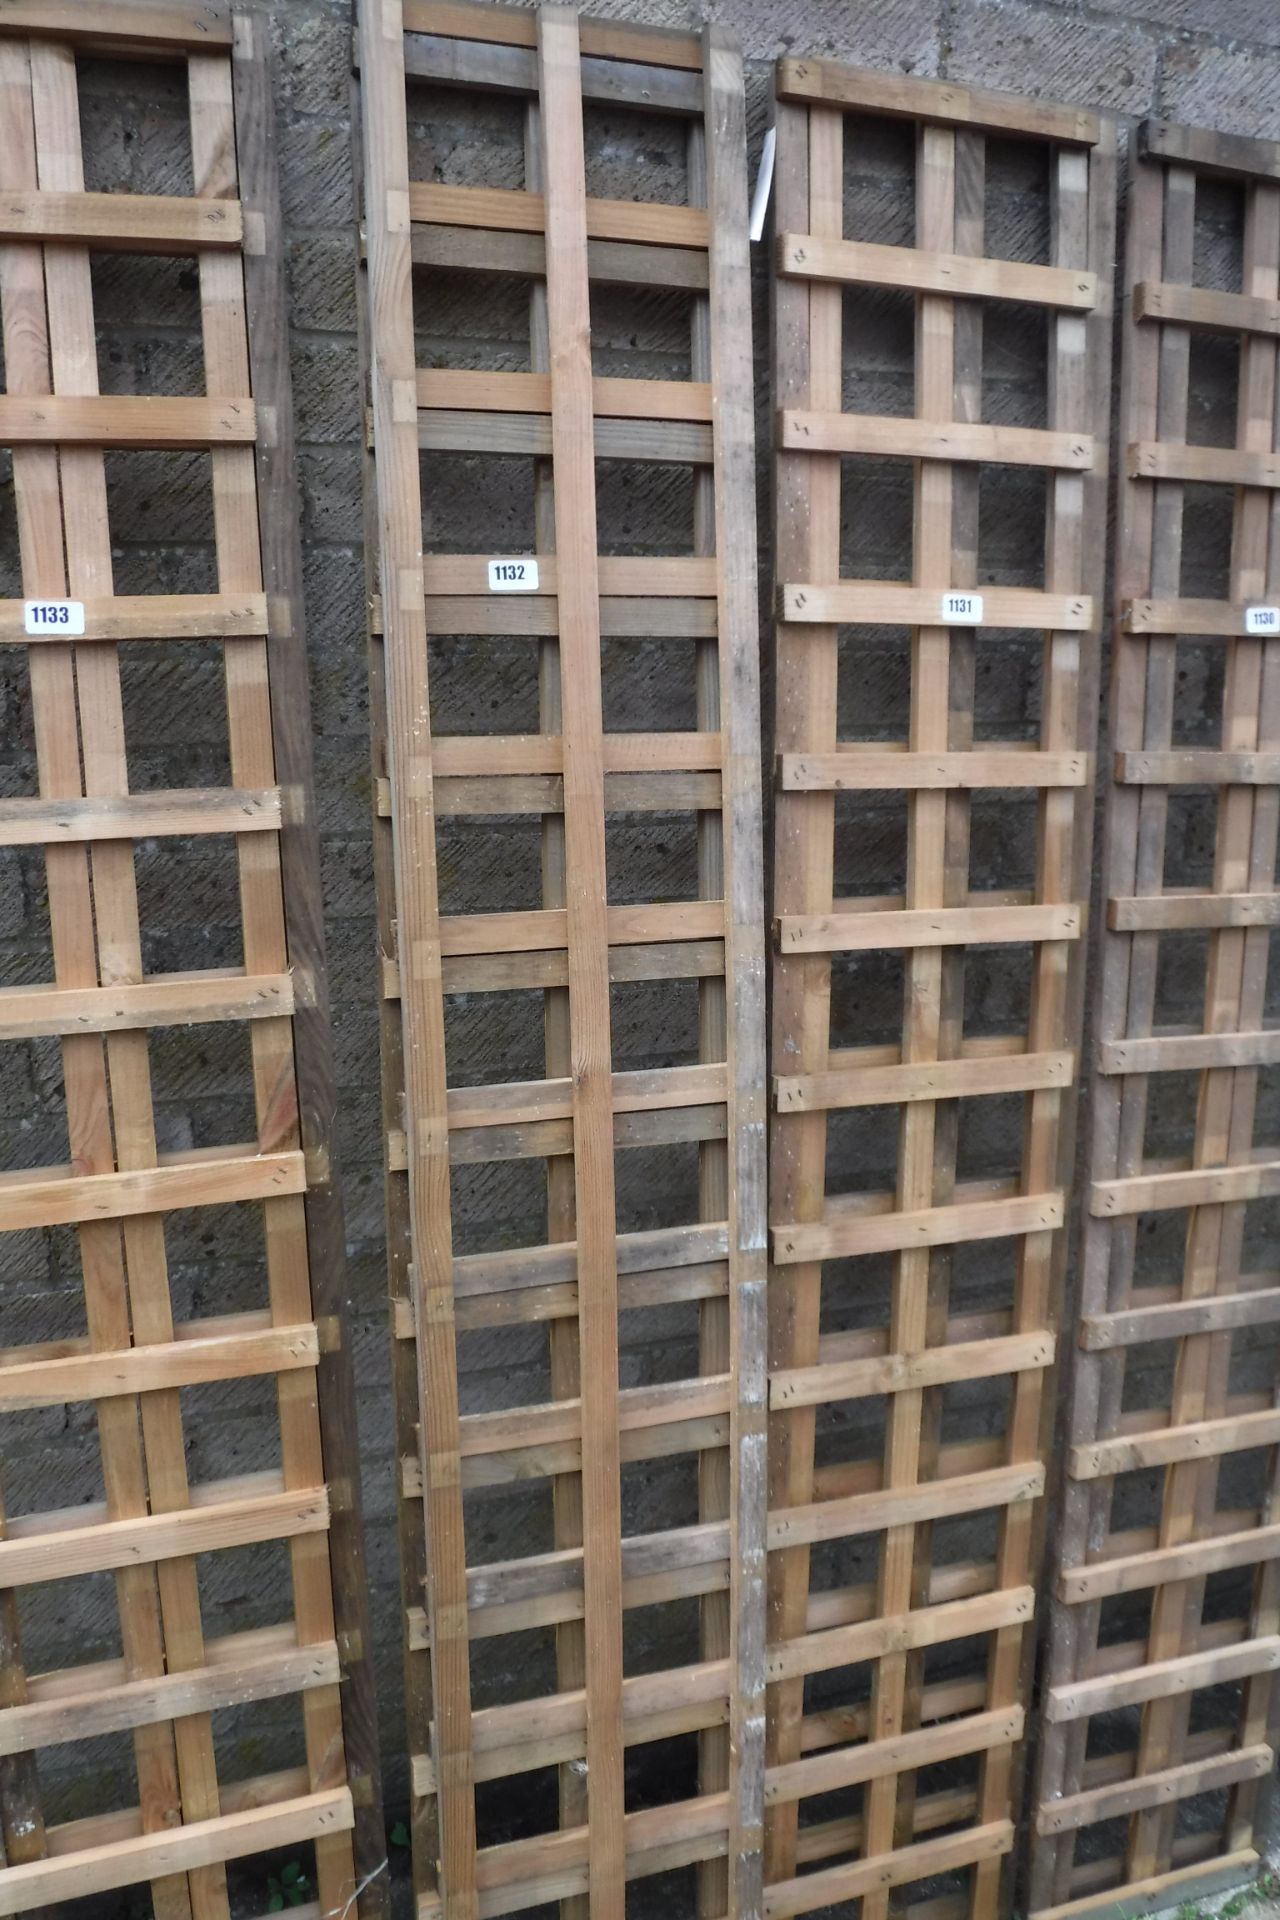 2 1'x6' wooden garden trellis panels